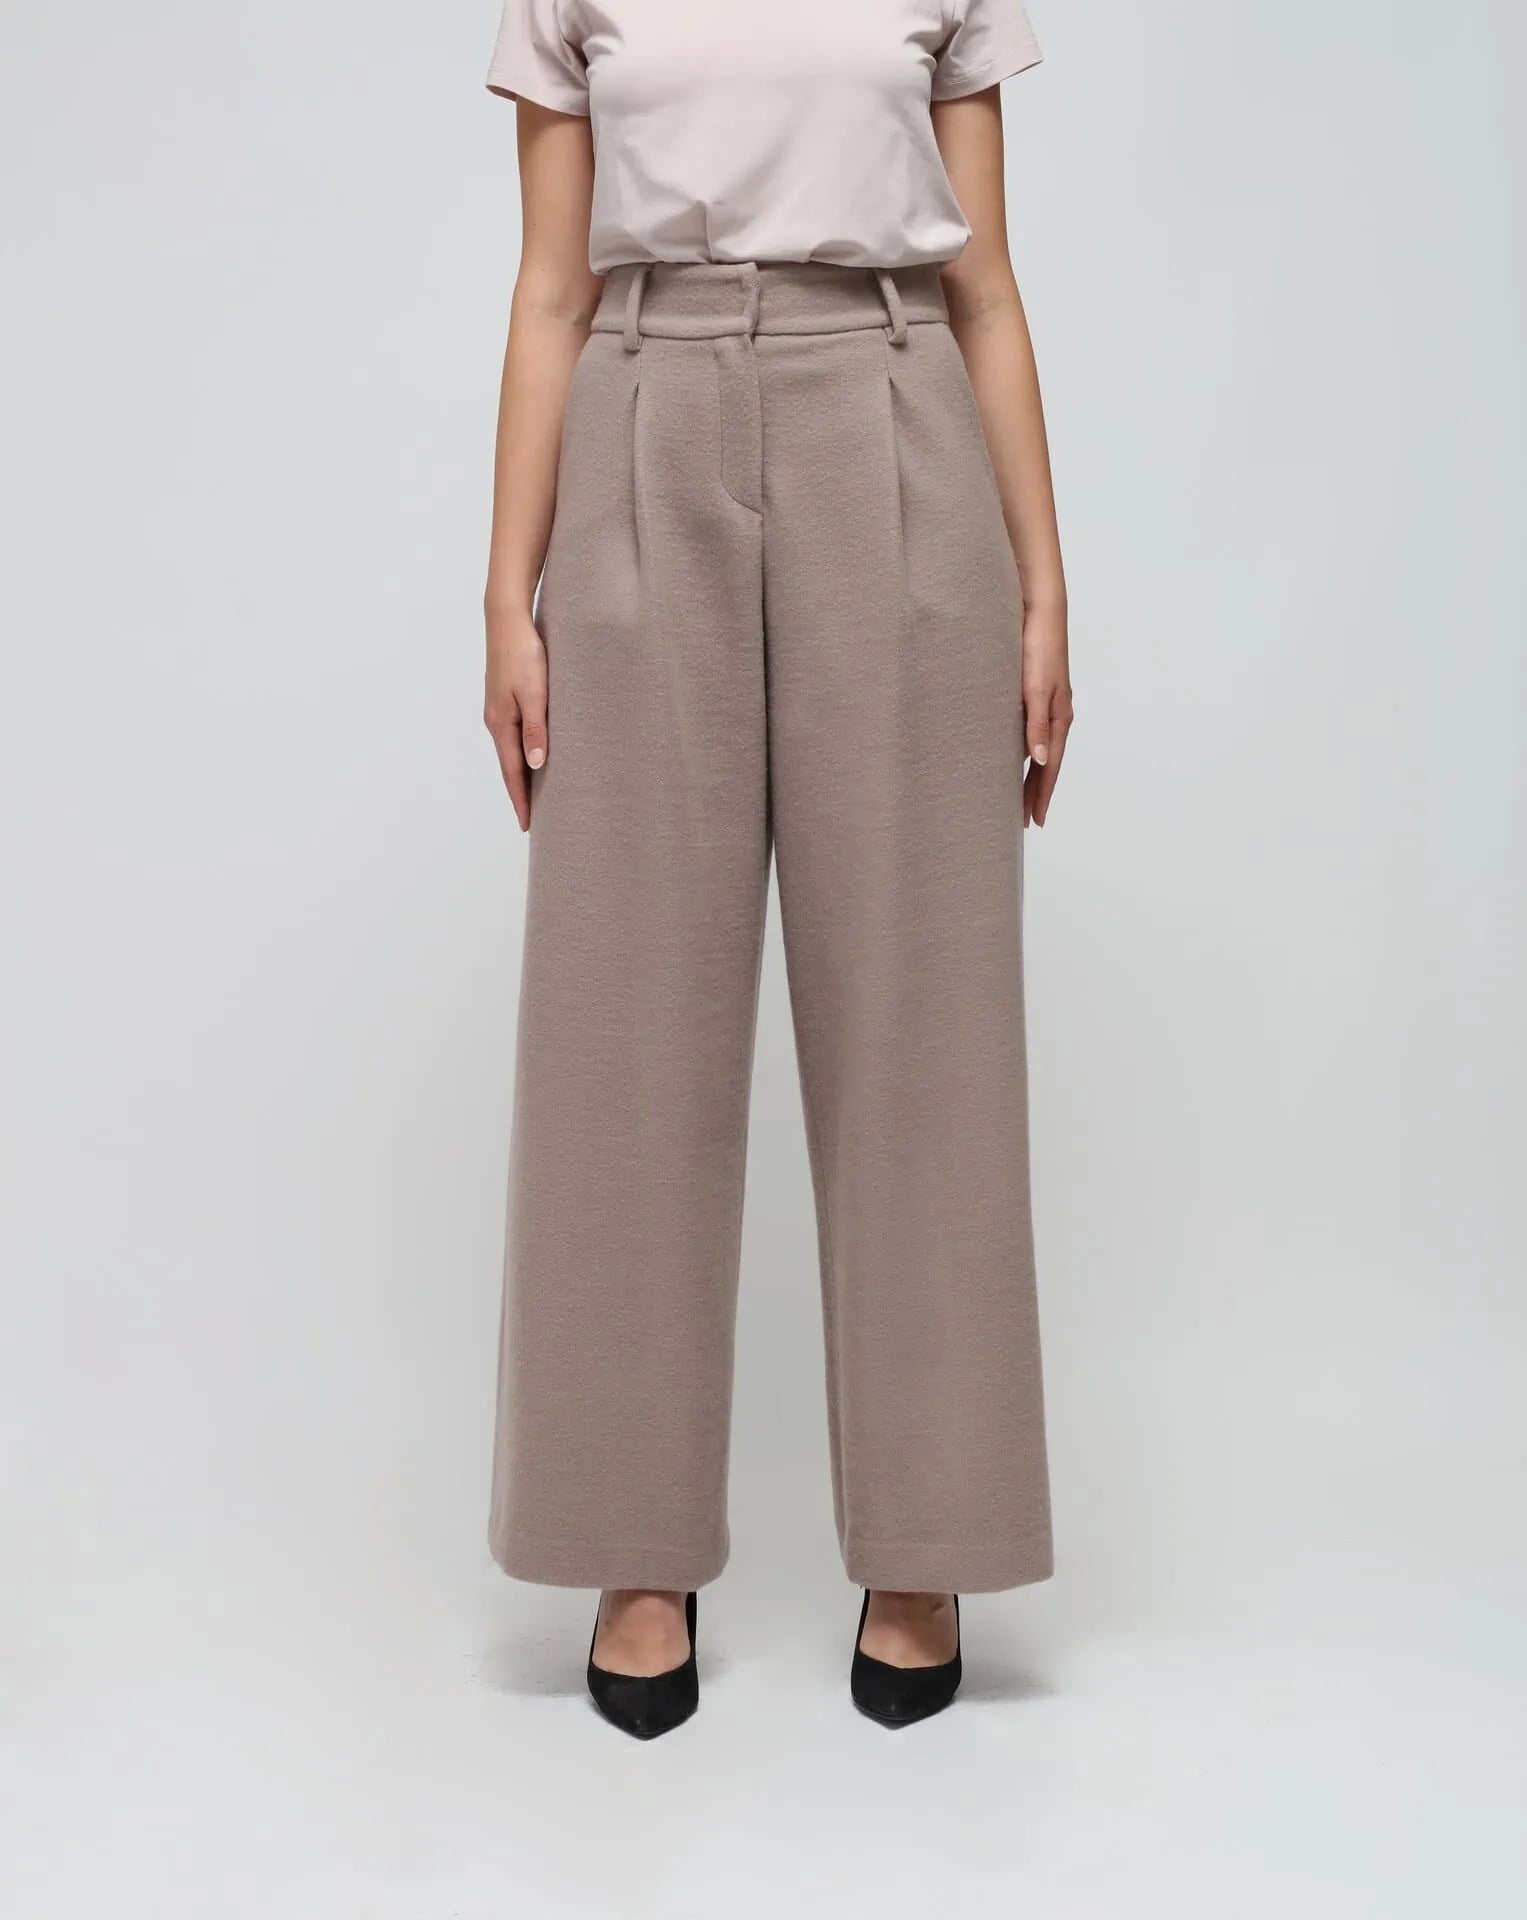 Buy WQ&EnergyWomen Womens Chiffon Regular Fit Long Shirt Palazzo Trousers  2PC 6 XL at Amazon.in